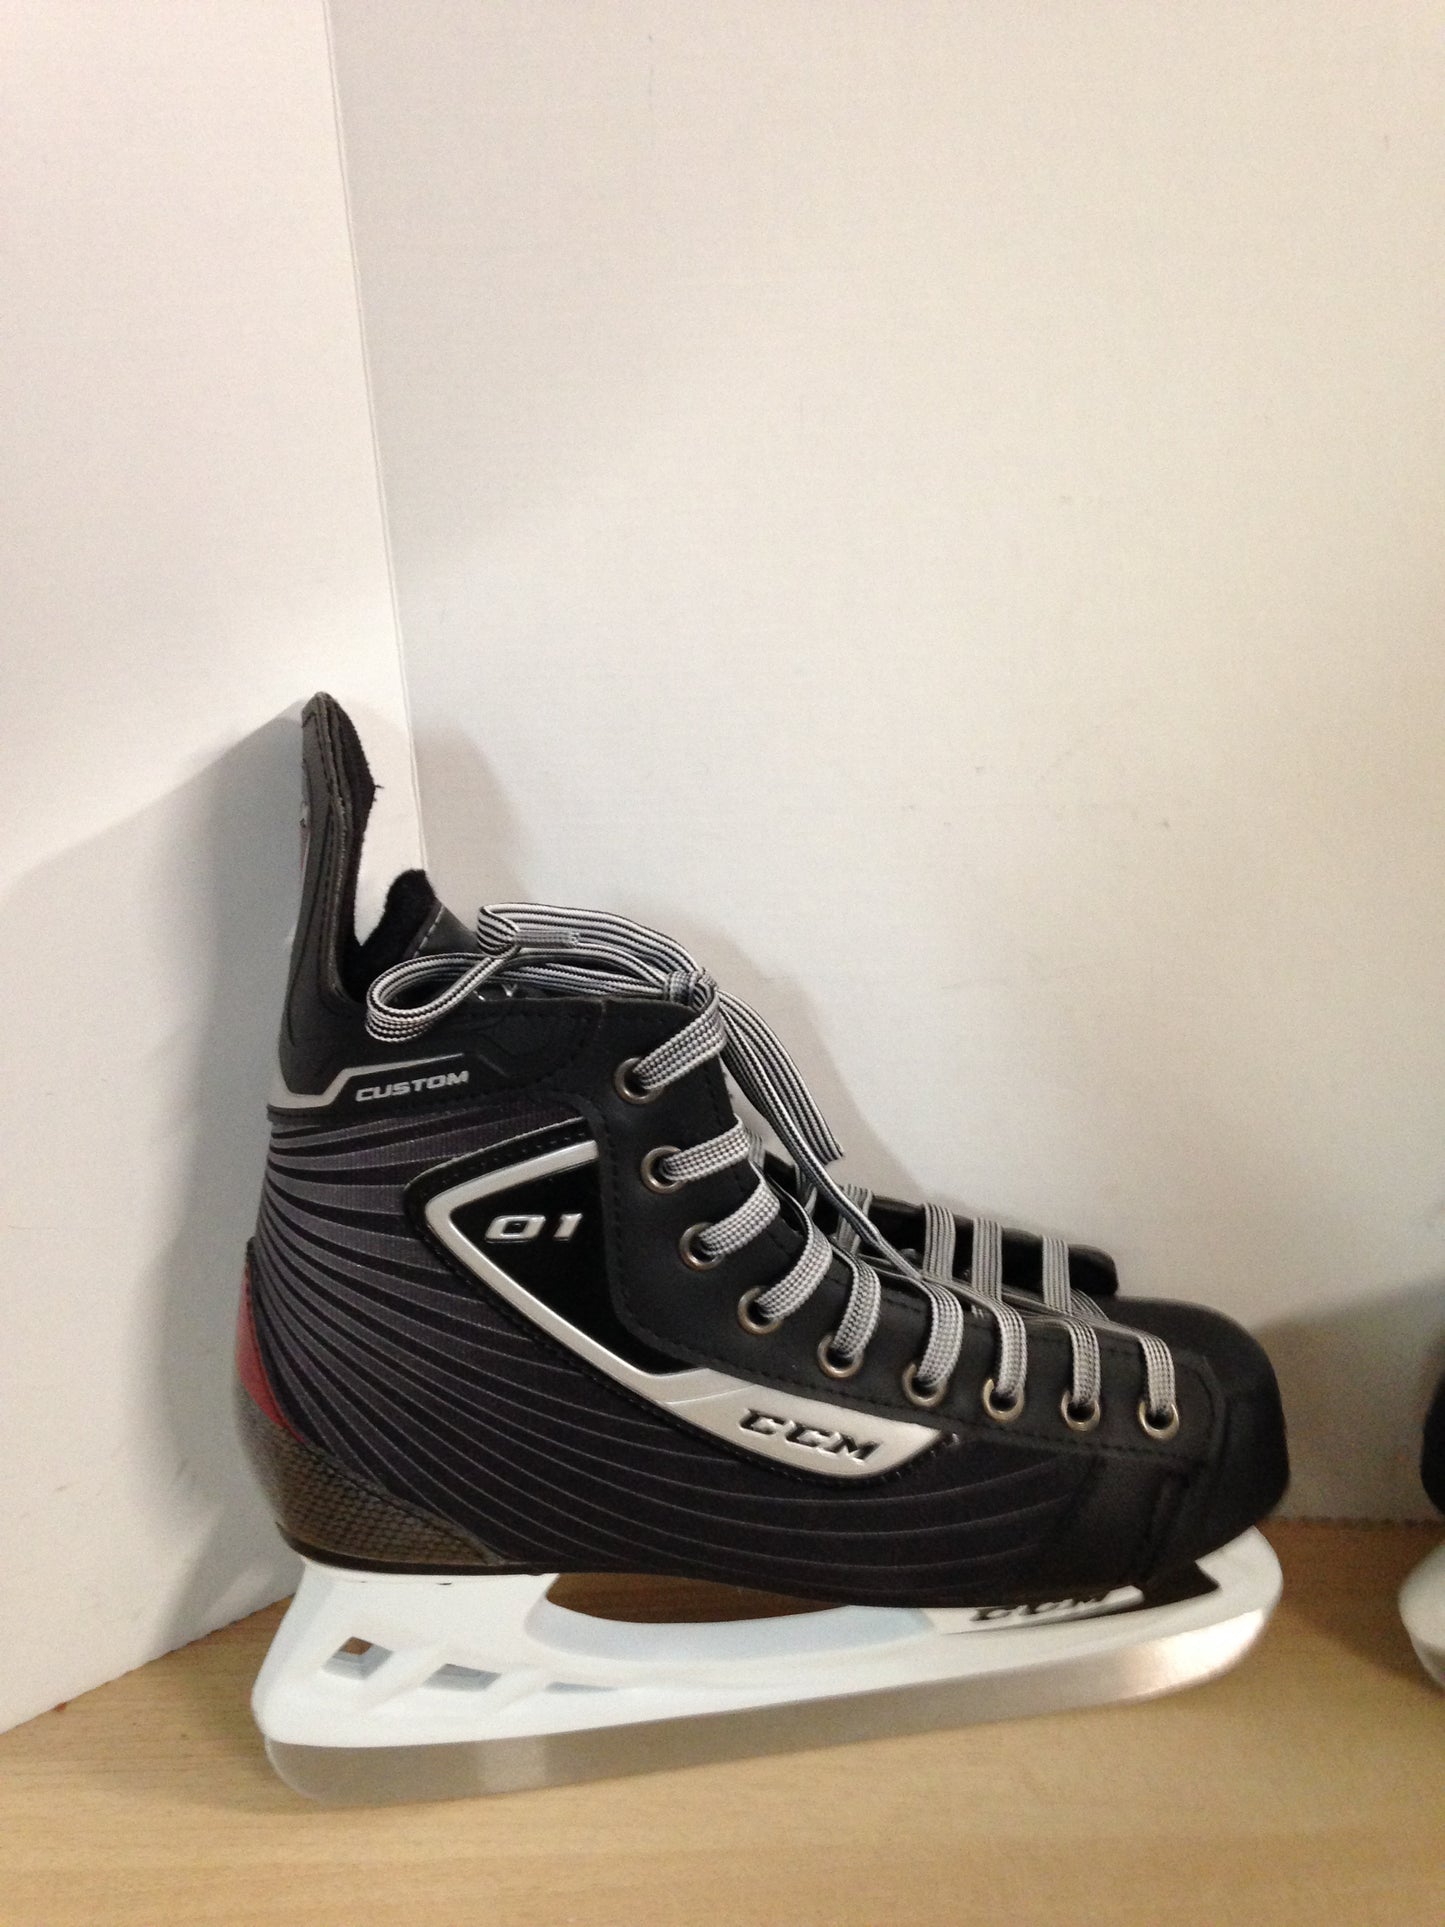 Hockey Skates Men's Size 6 Shoe Size CCM Custom New Demo Model